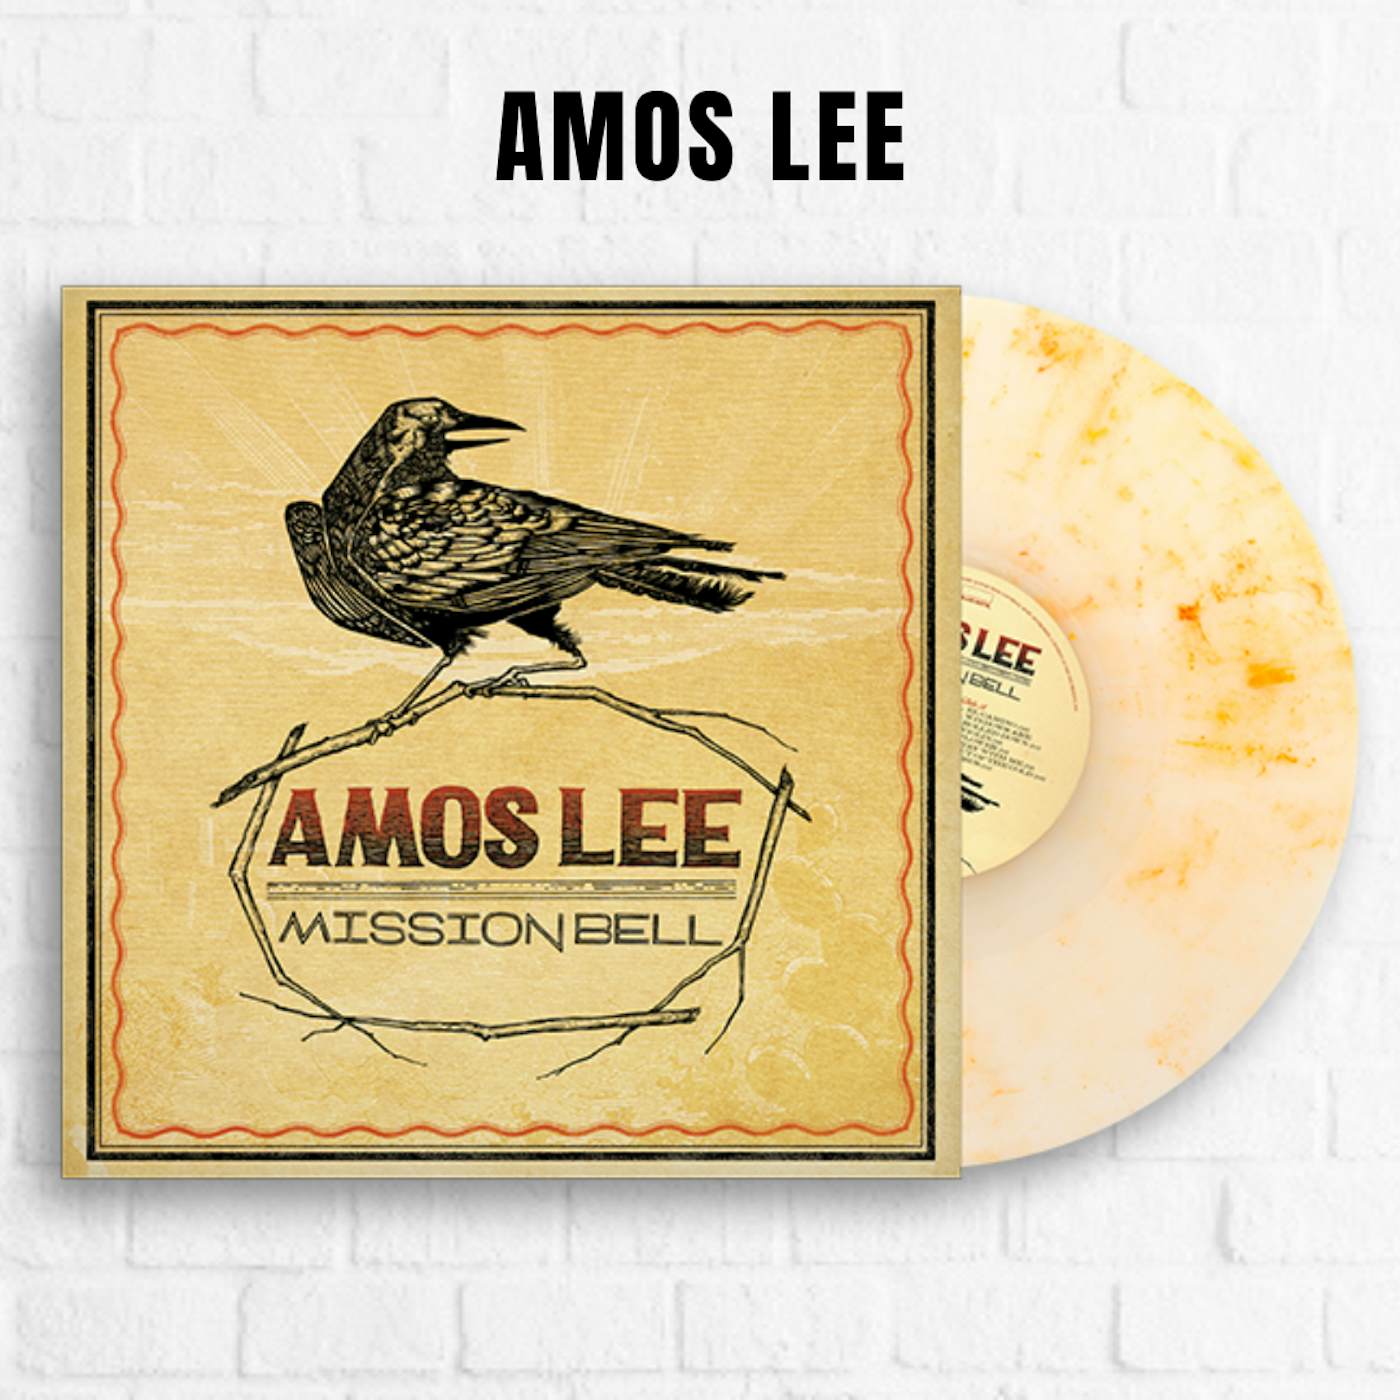 Amos Lee Mission Bell [Limited Oakwood]